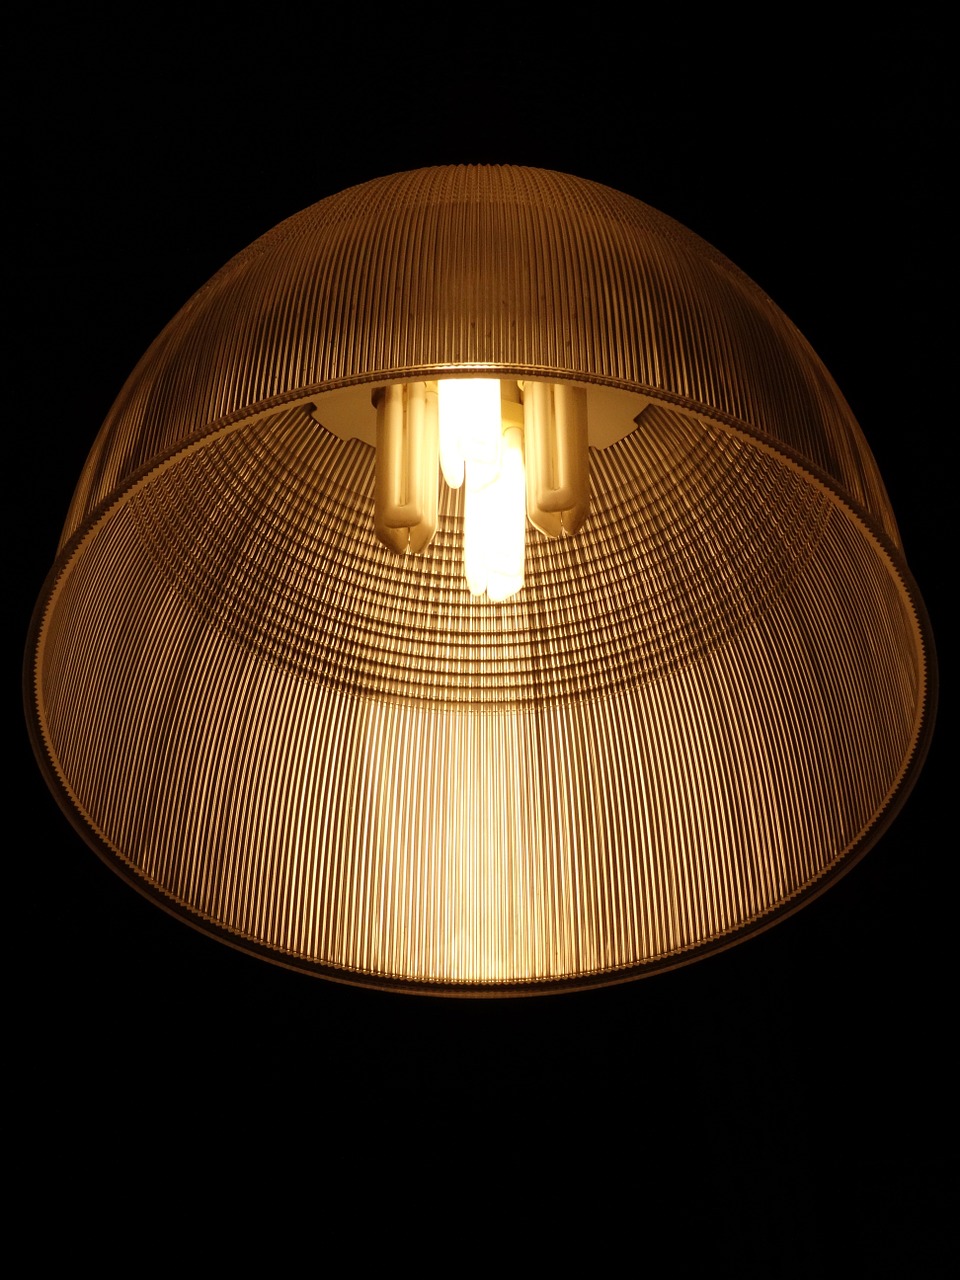 lamp lampshade light free photo